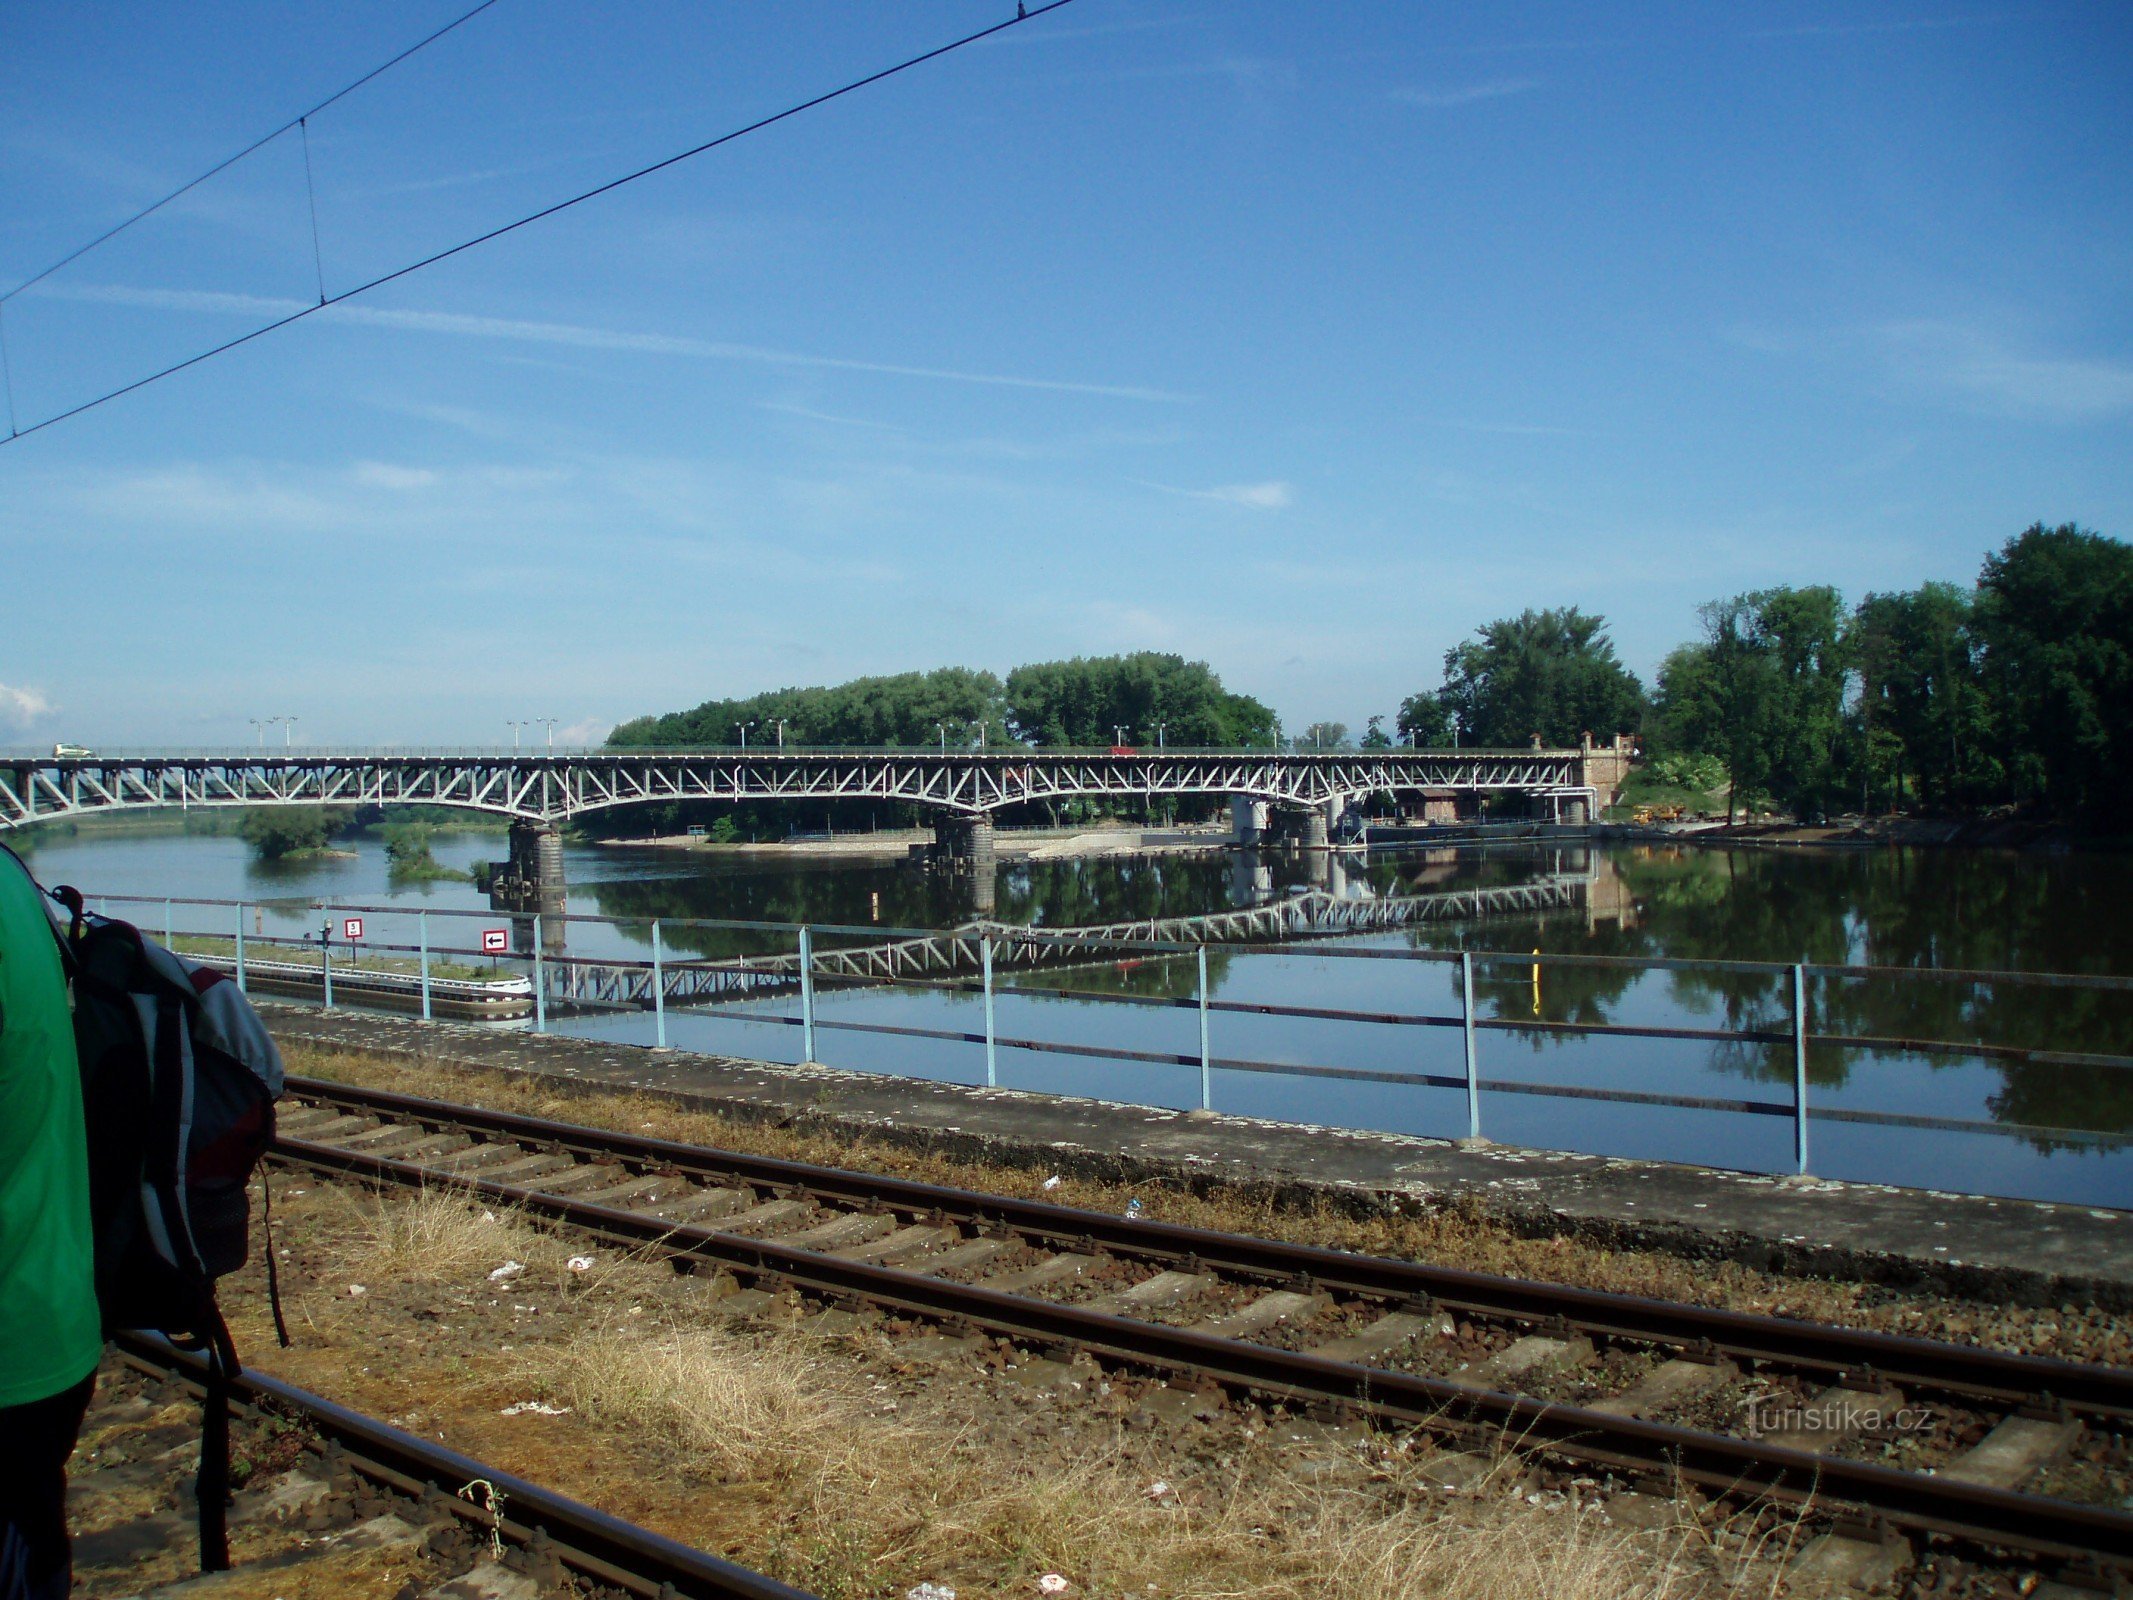 Roudnice nad Labem の橋